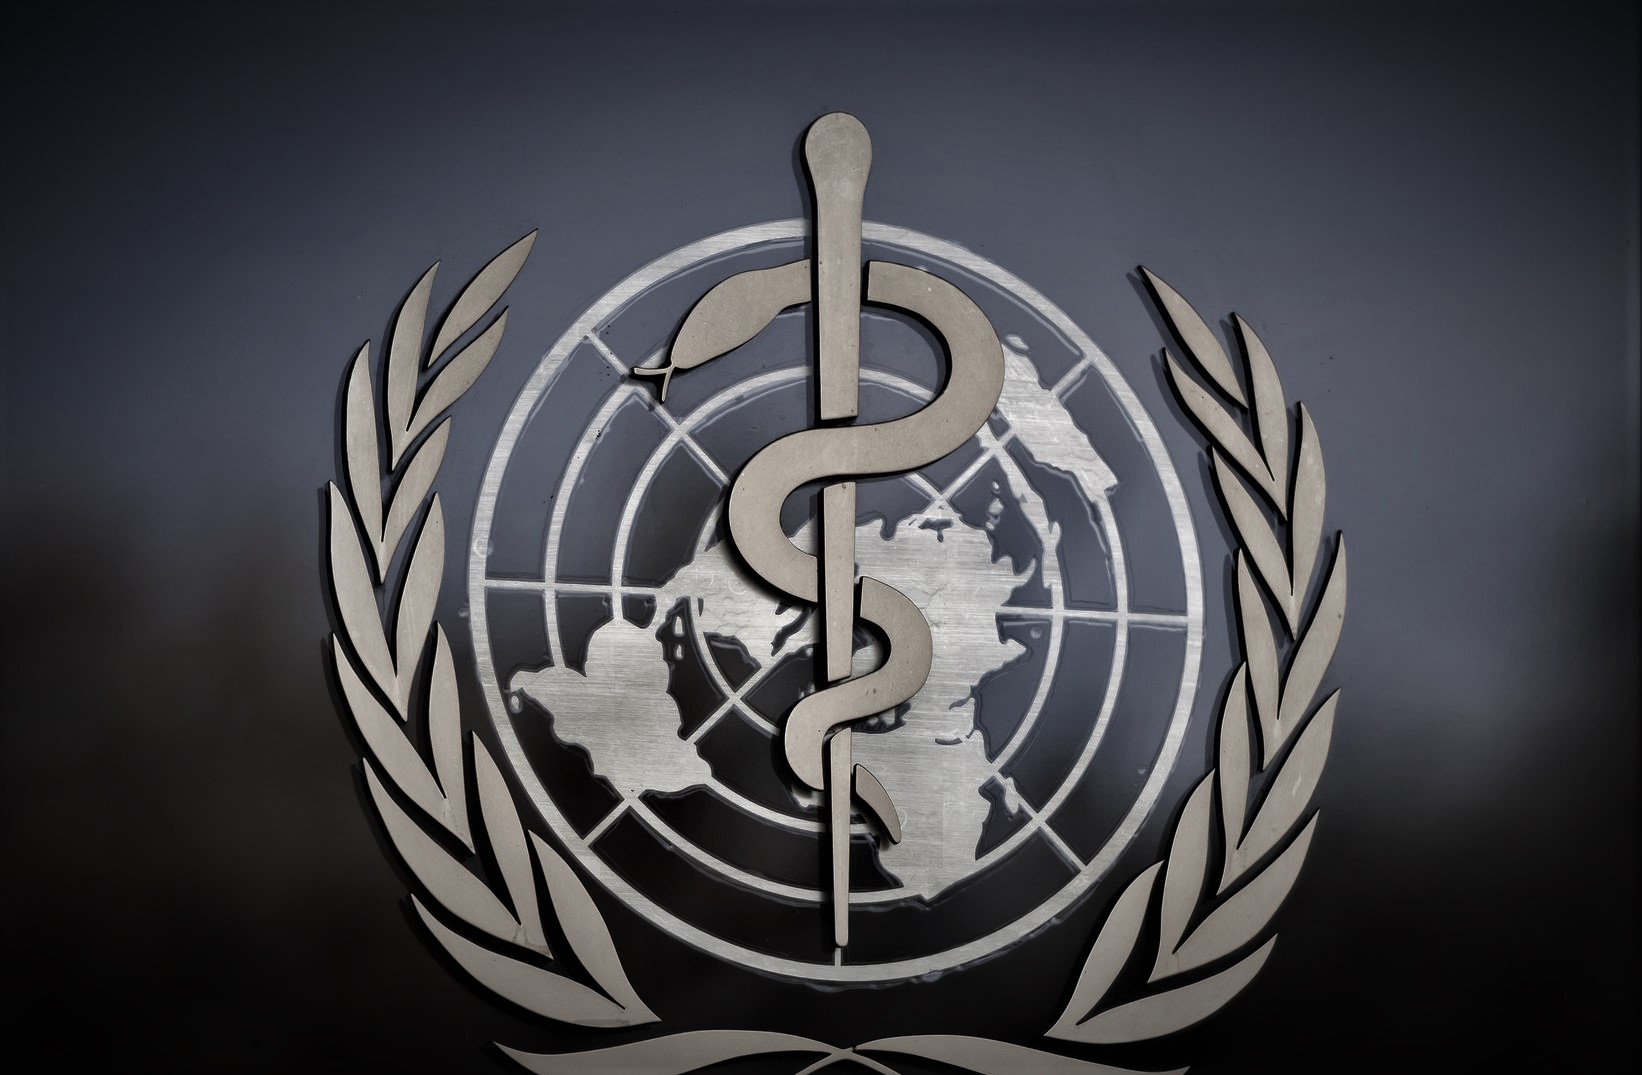 WHO – World Health Organization